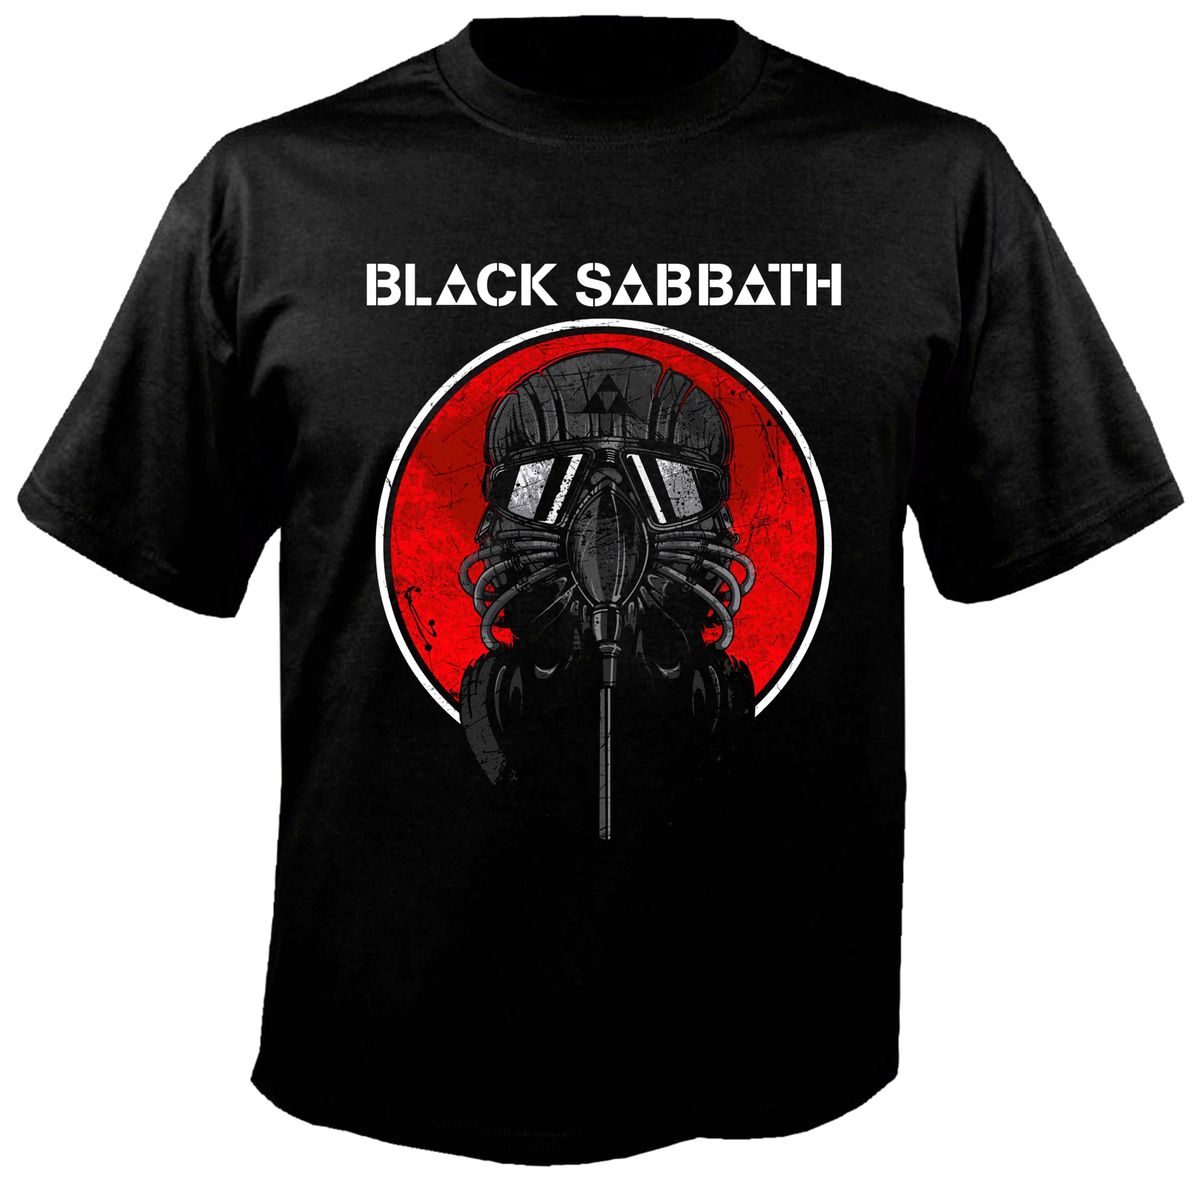 Black Sabbath Band T-Shirt – Metal & Rock T-shirts and Accessories